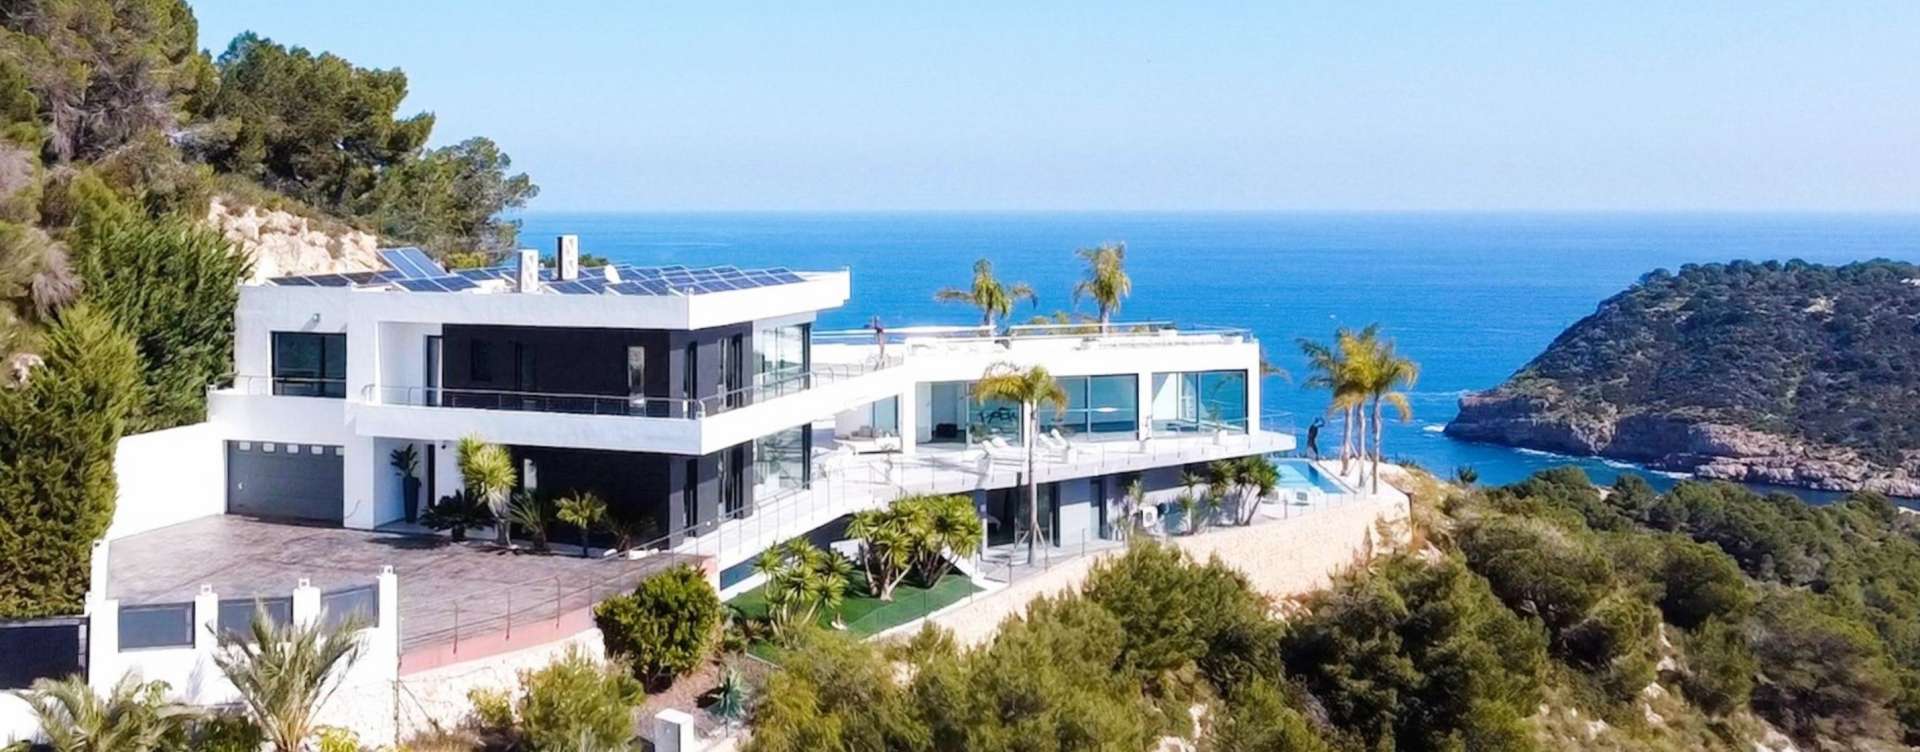 COSTA HOUSES Luxury Villas S.L ®️ VILLA CITRINE - For sale NEW LUXURY WATERFRONT MODERN HOUSE IN JAVEA COSTA BLANCA SPAIN